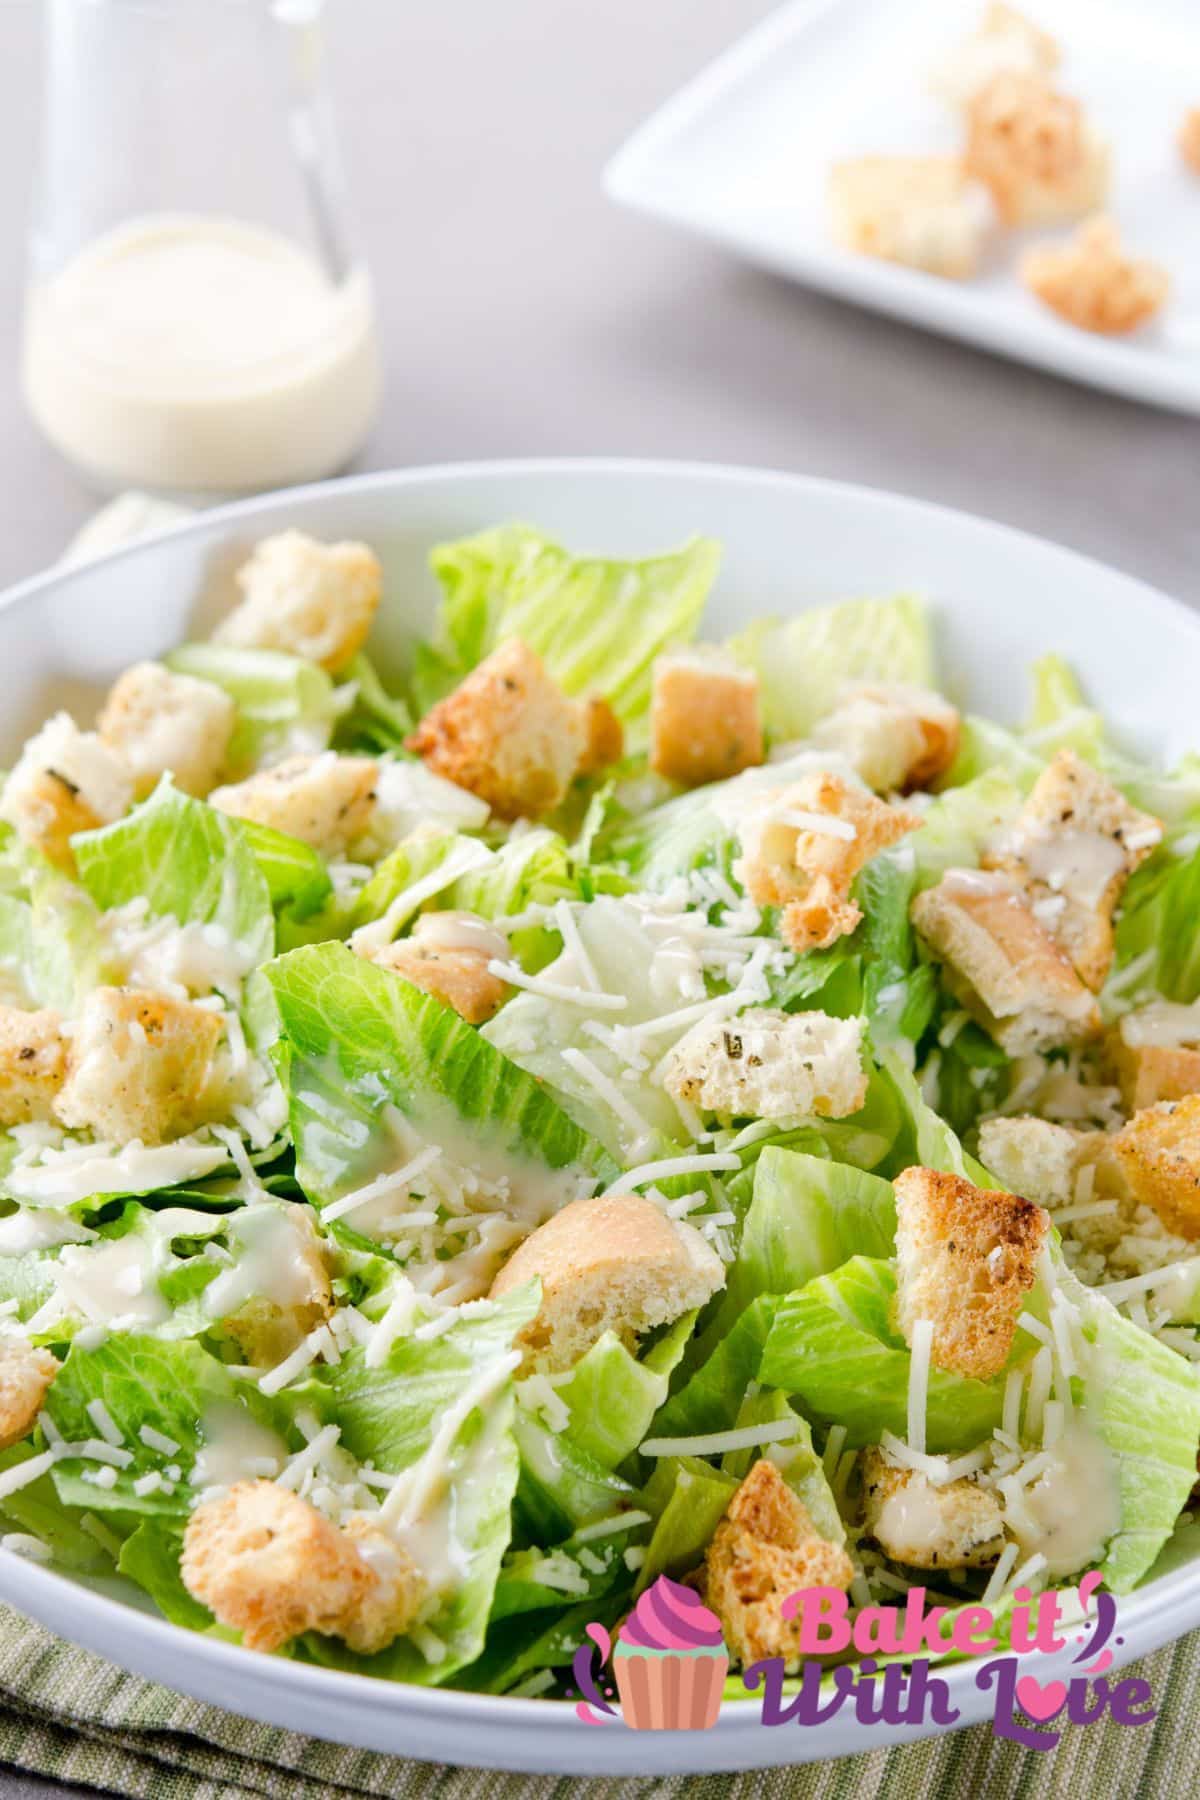 Grande image de salade César dans un bol blanc.